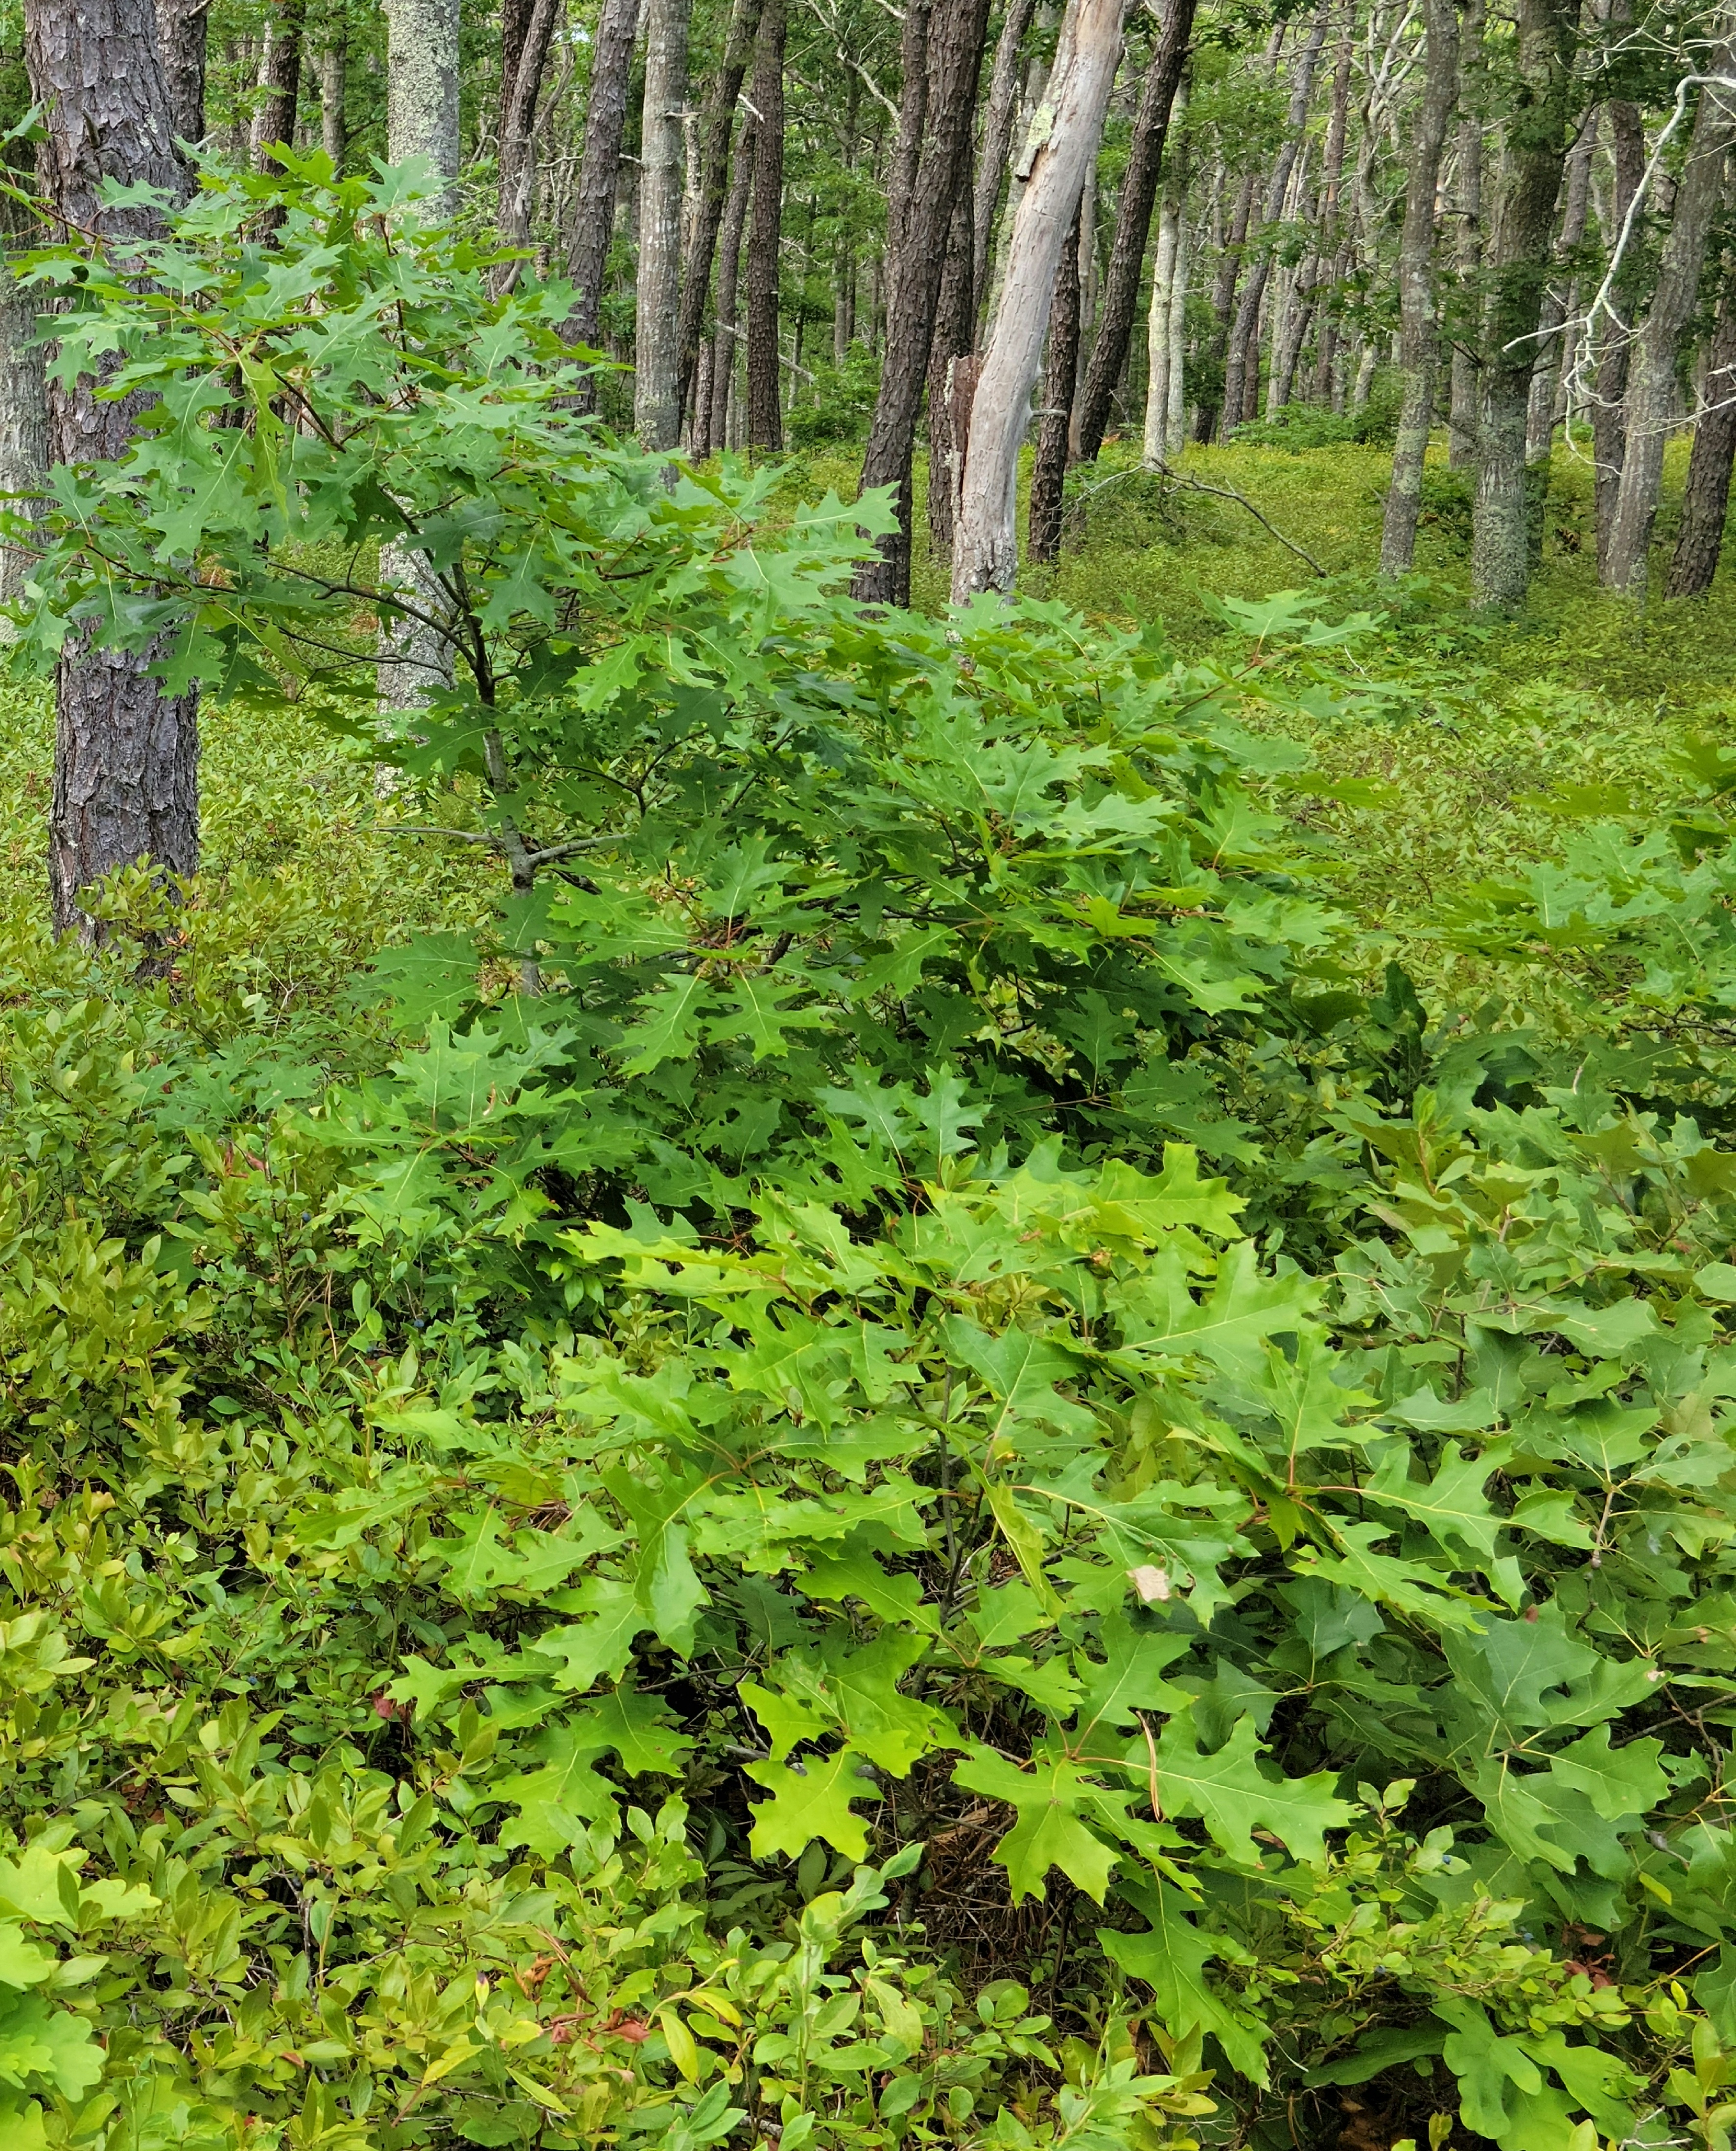 Black oak and scrub oak surrounded by blueberry bushes